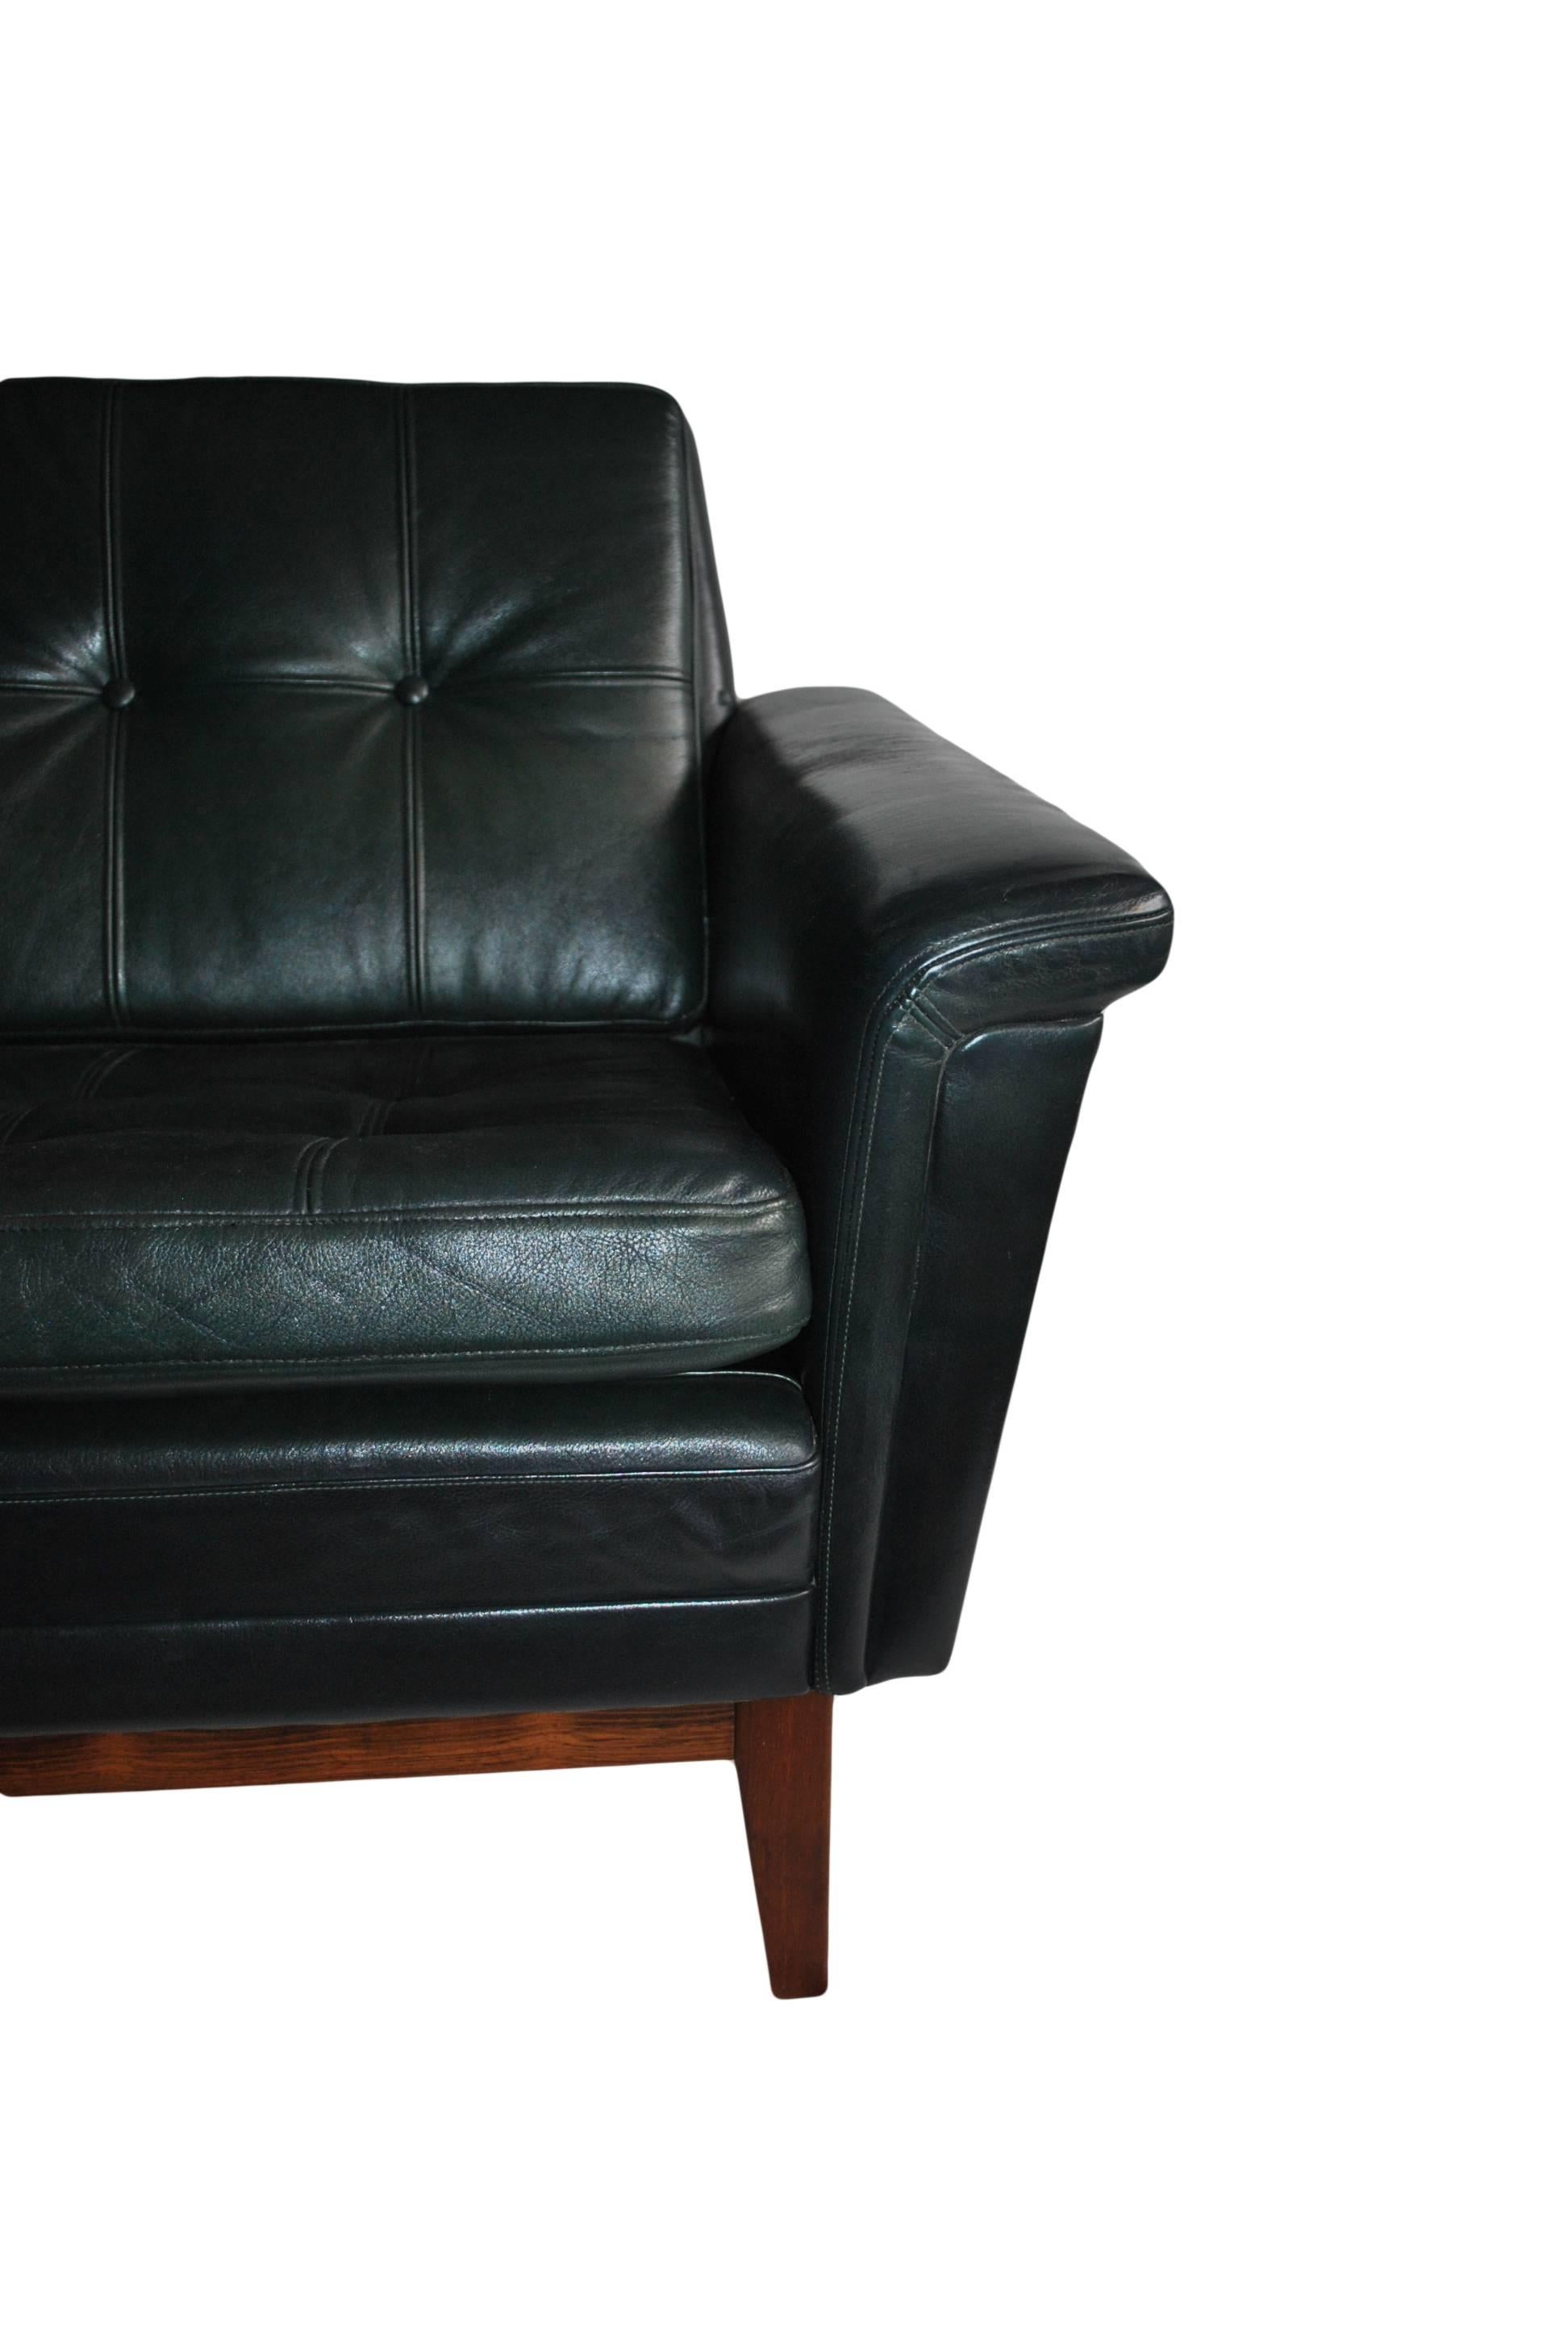 Danish Leather Club Chair 2